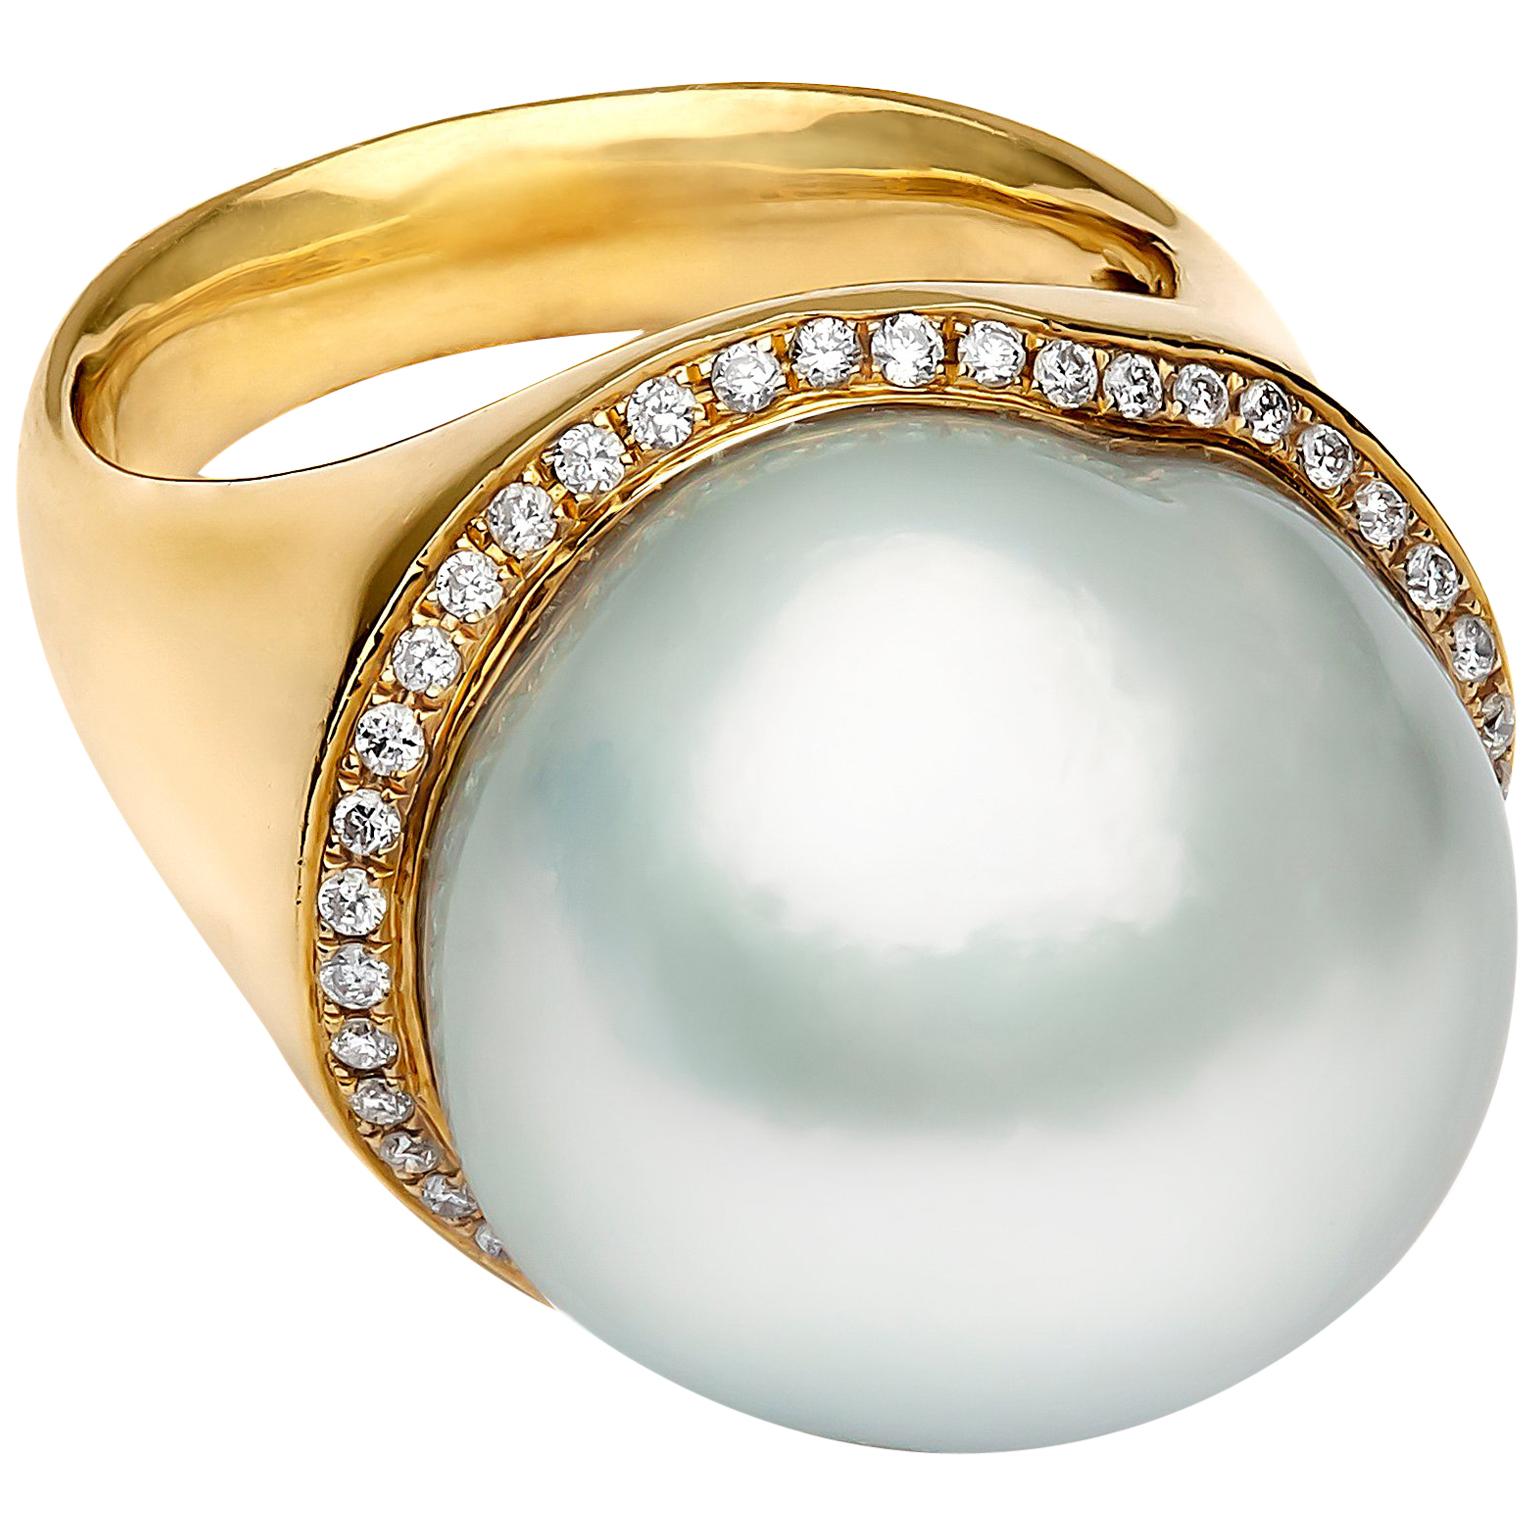 Yoko London Baroque South Sea Pearl and Diamond Ring Set in 18 Karat Yellow Gold